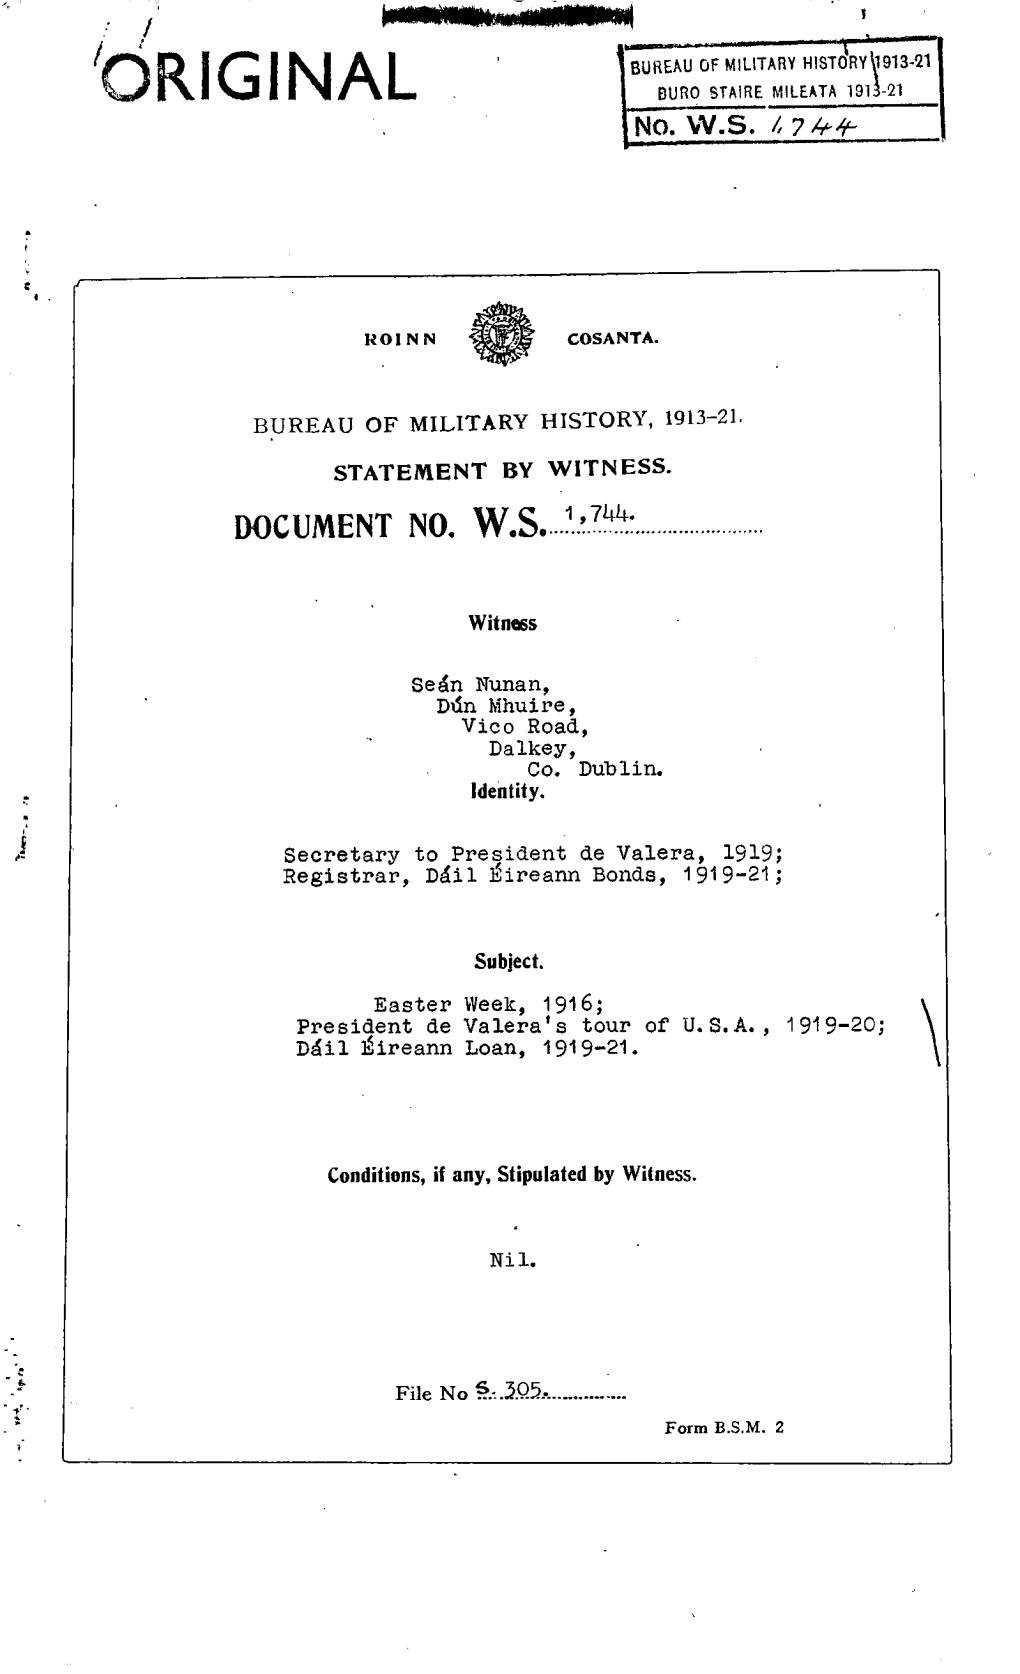 ROINN COSANTA. BUREAU of MILITARY HISTORY, 1913-21. STATEMENT by WITNESS. DOCUMENT NO. W.S. 1,744. Witness Seán Nunan, Dún